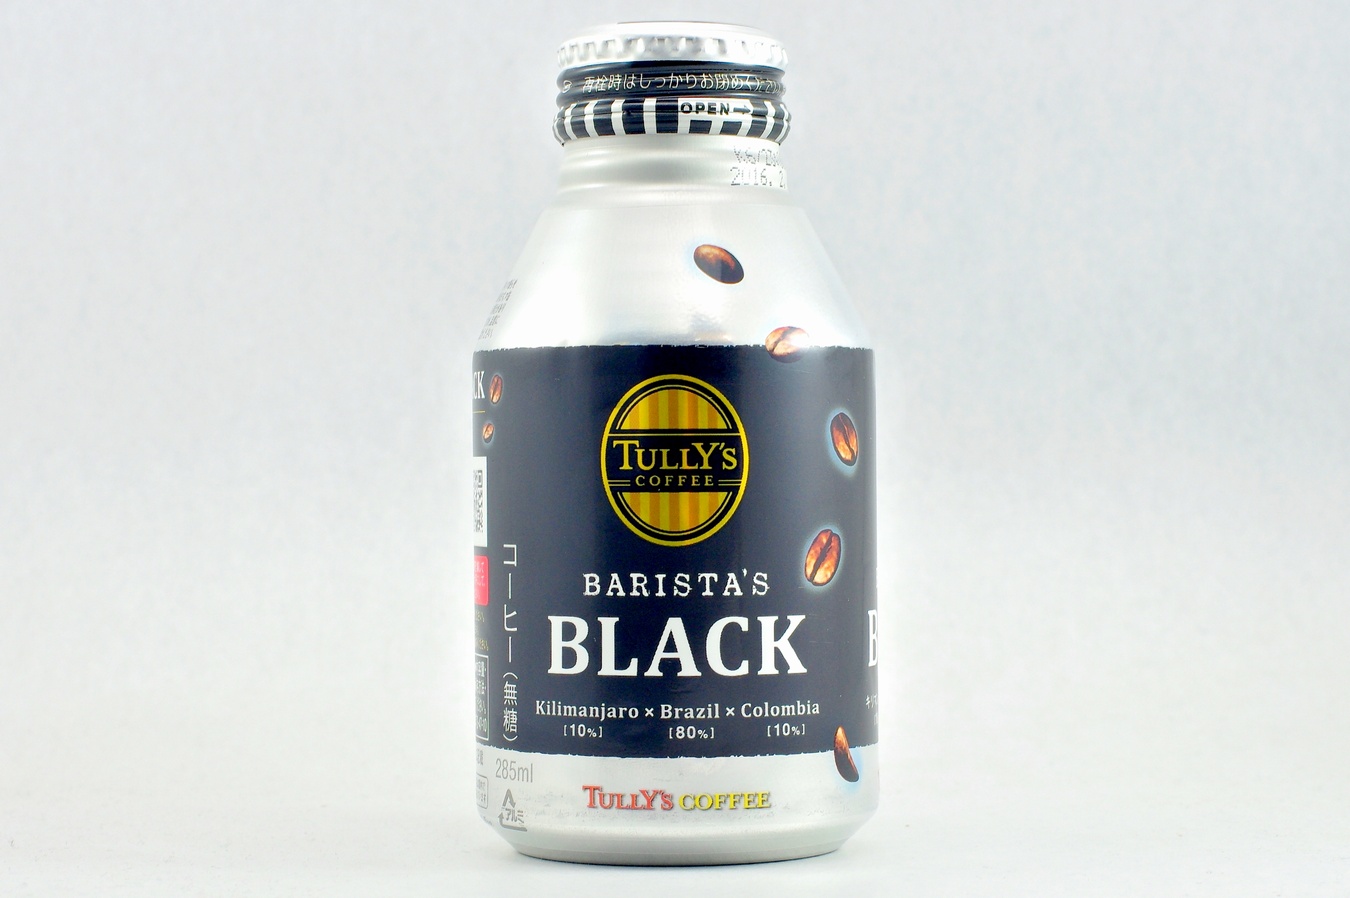 TULLY'S COFFEE BARISTA'S BLACK 285mlボトル缶 2015年2月